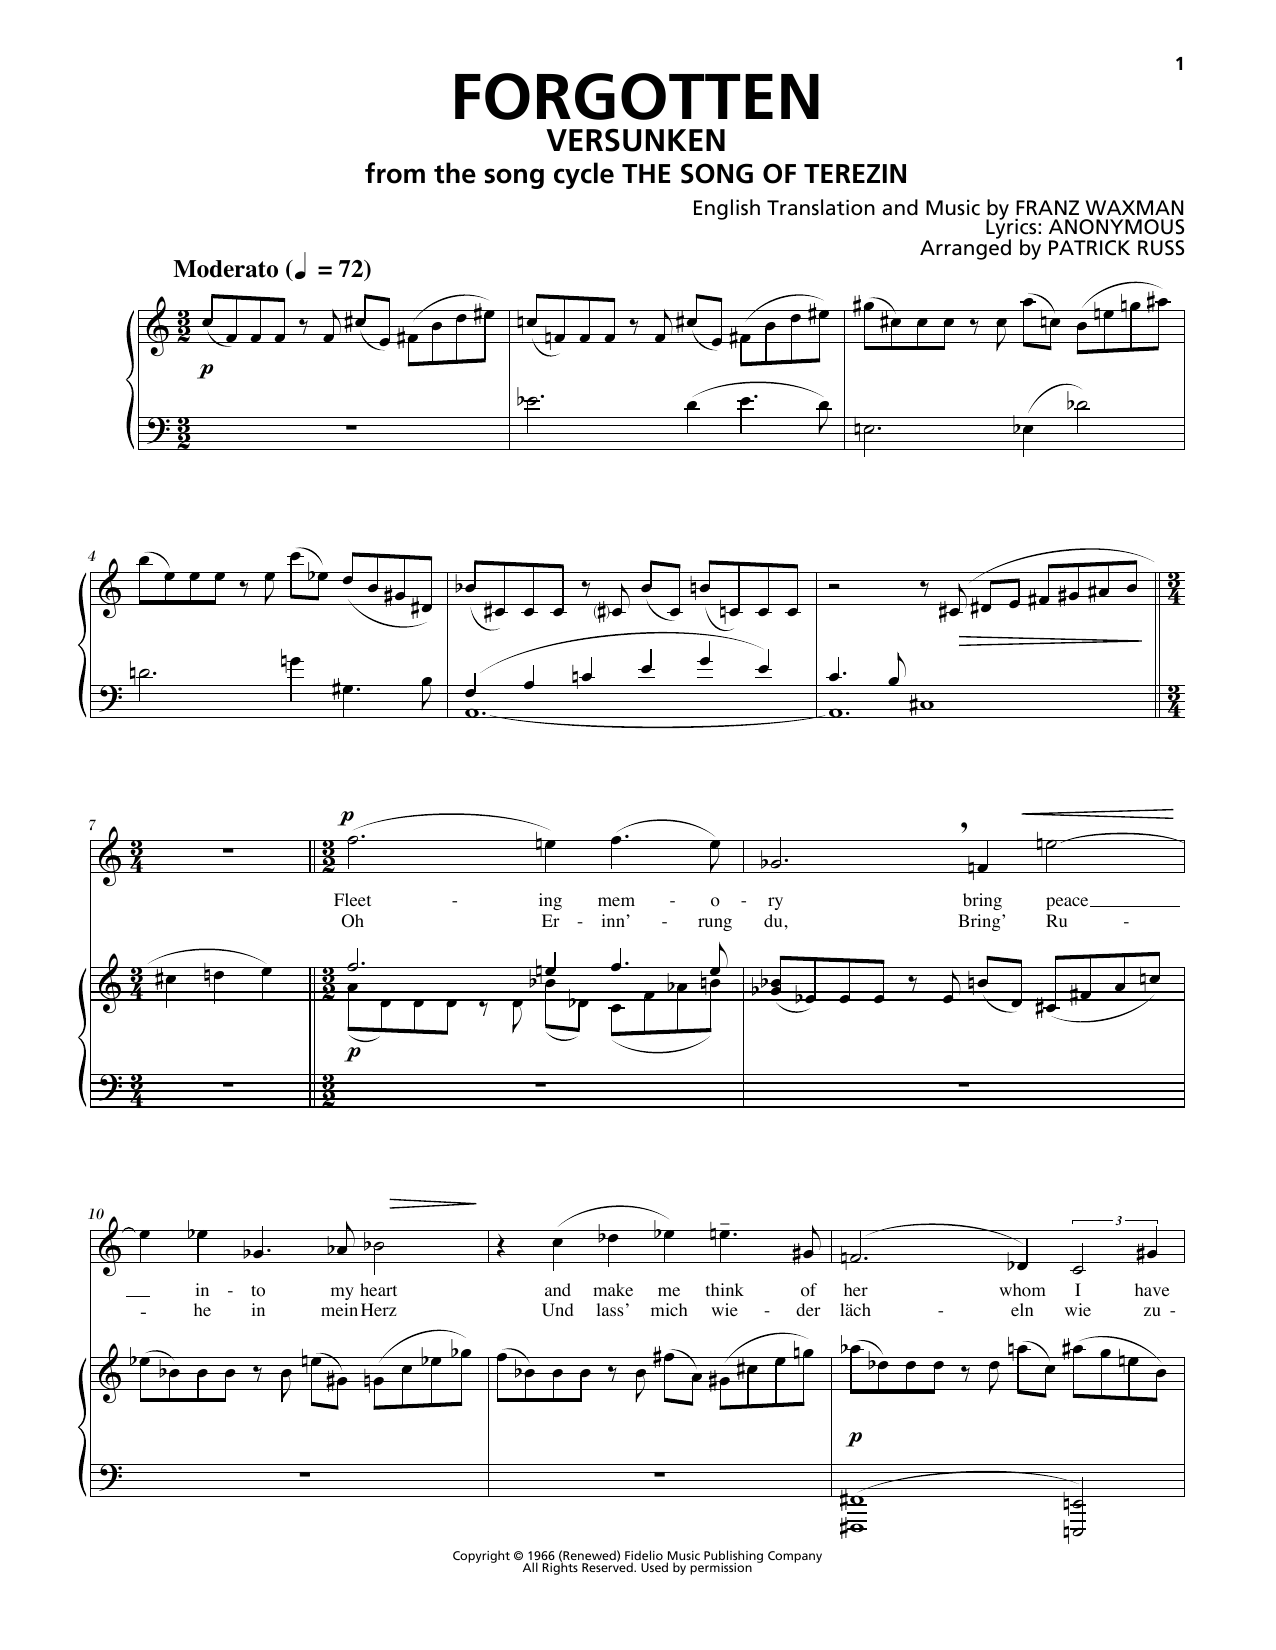 Franz Waxman Forgotten (Versunken) Sheet Music Notes & Chords for Piano & Vocal - Download or Print PDF